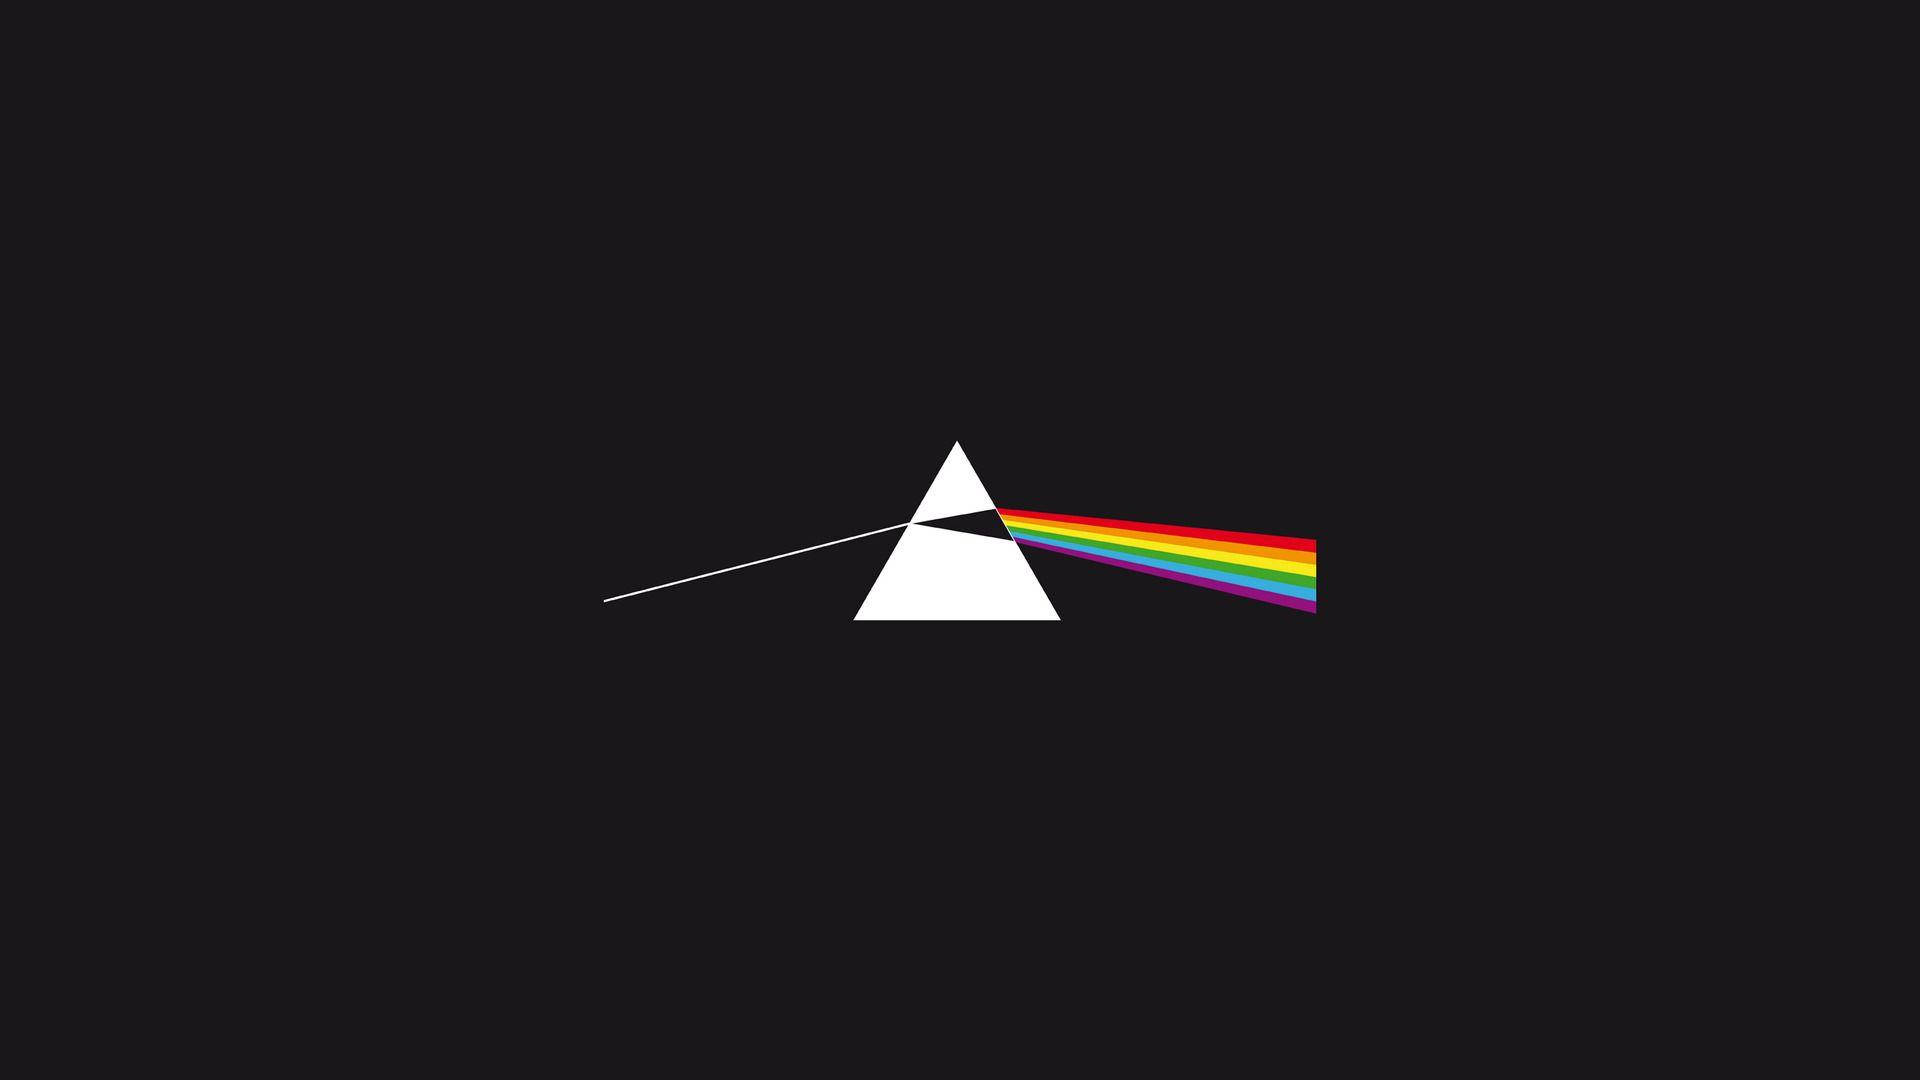 Minimalist Desktop Pink Floyd Album Picture